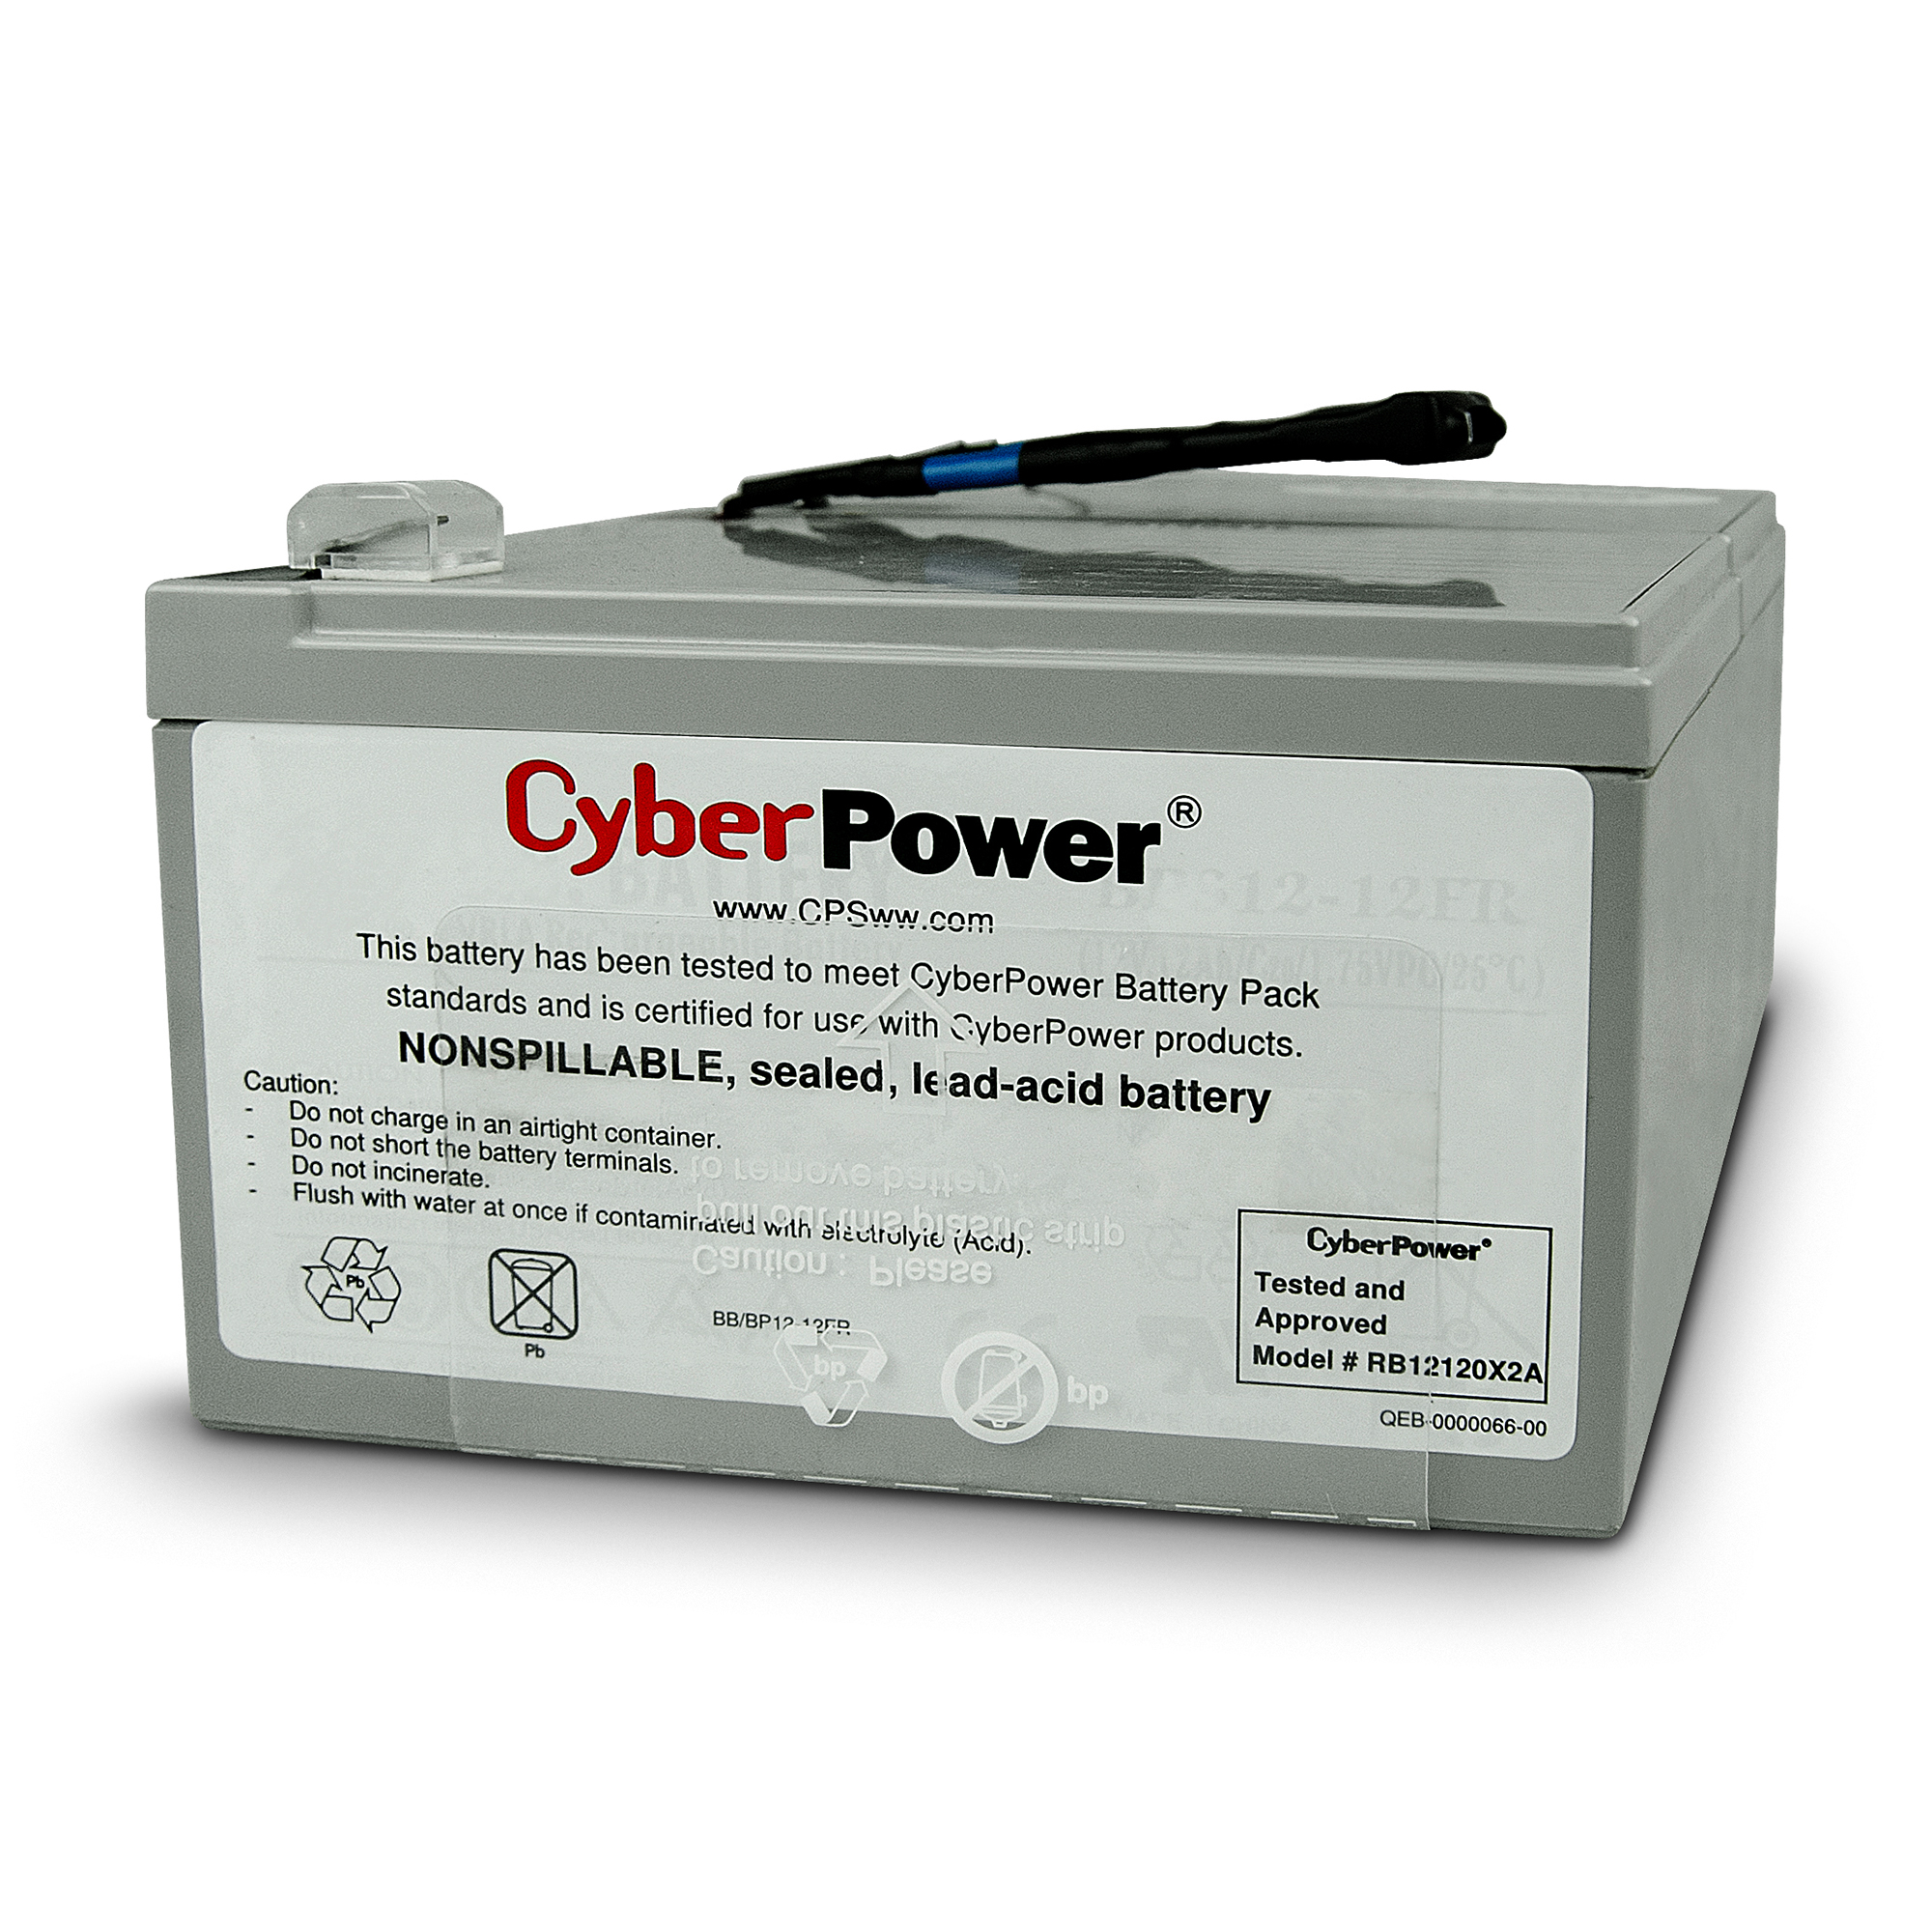 Sealed battery. CYBERPOWER pr1000elcd. CYBERPOWER rbp0129. CYBERPOWER rbp0030. RB 12120.